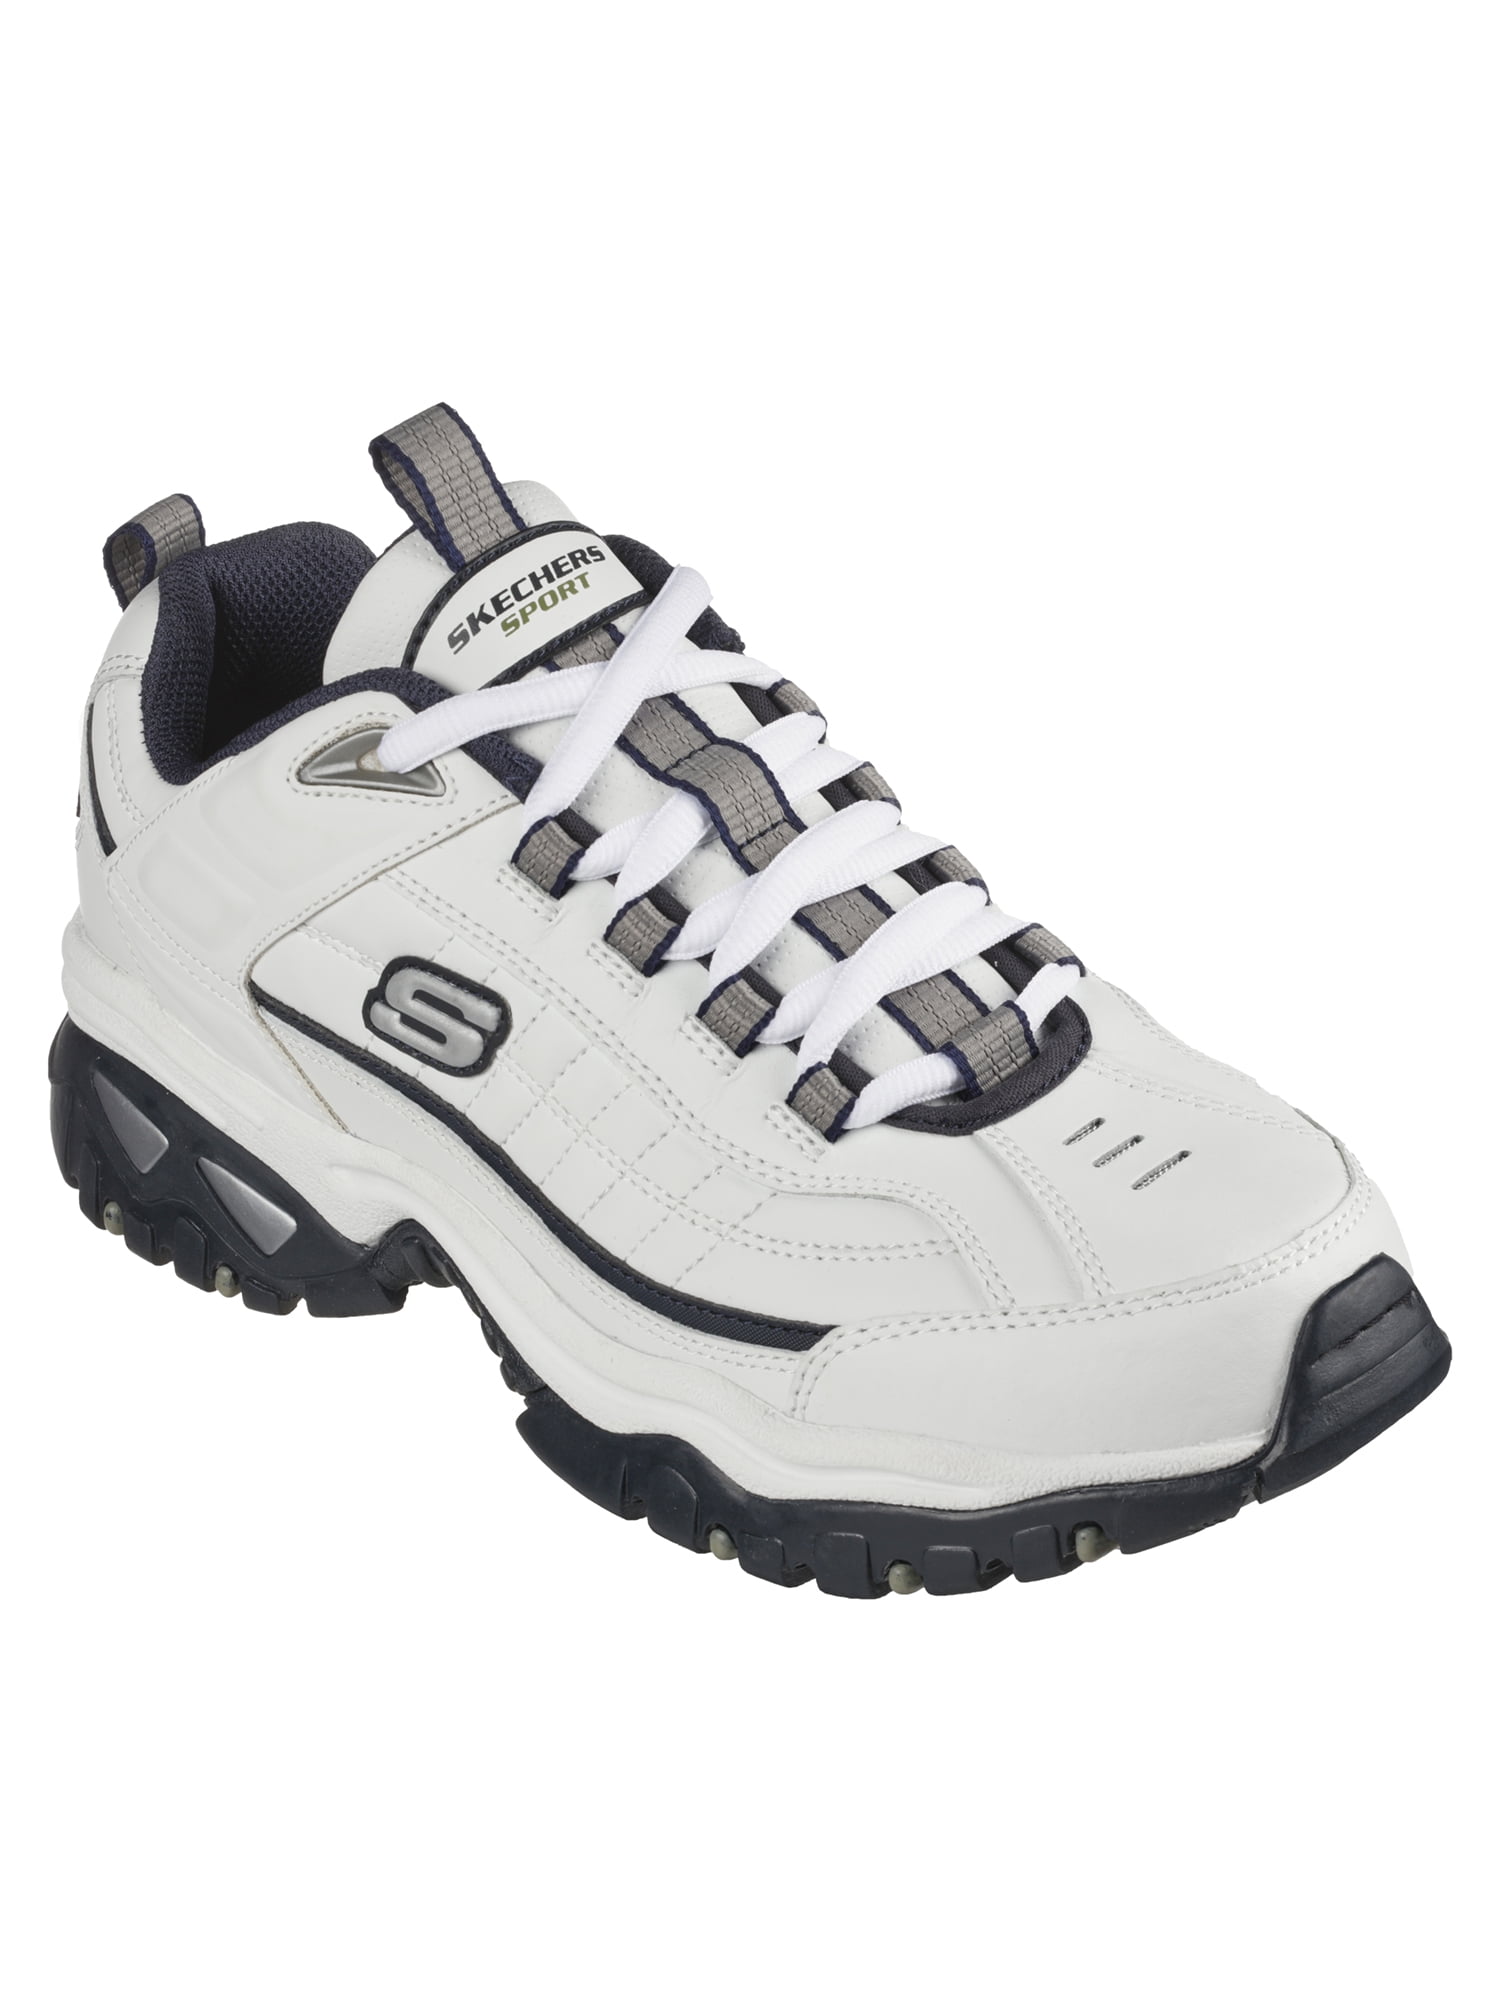 Skechers Men's Energy Burn Athletic Sneakers (Wide Available) - Walmart.com